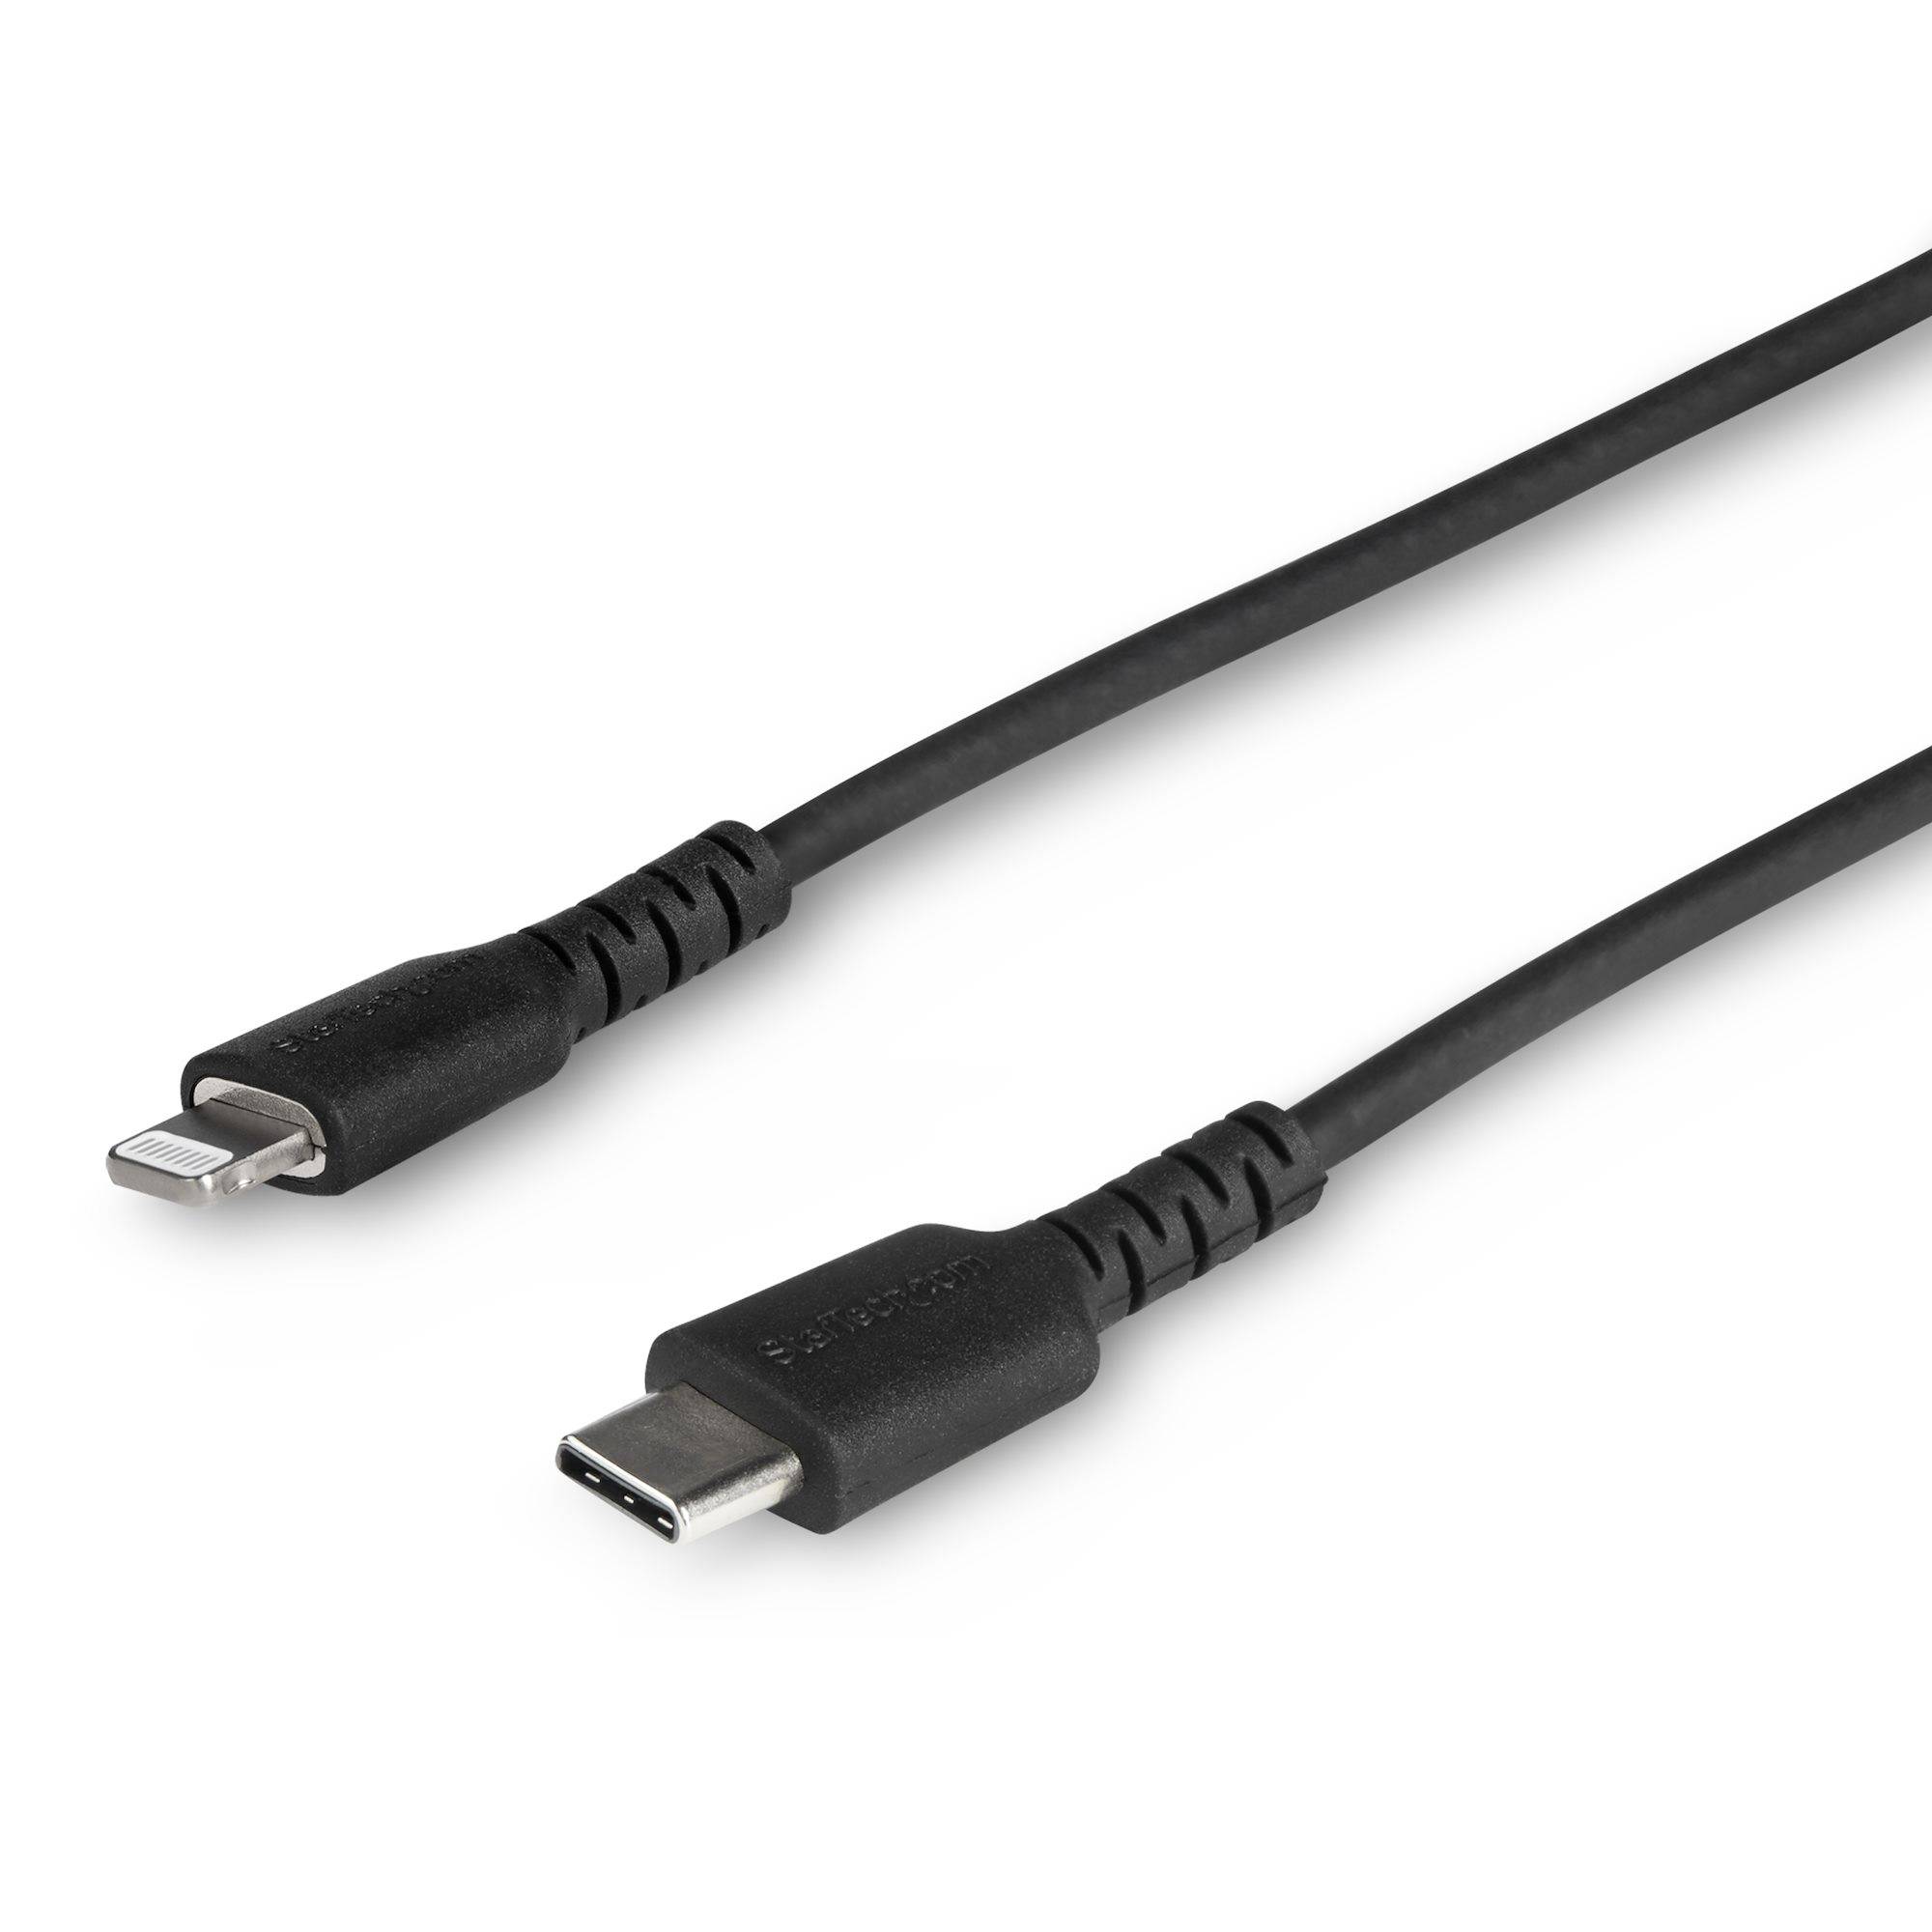 Rca Informatique - Image du produit : 1M USB C TO LIGHTNING CABLE BLACK - ARAMID FIBER